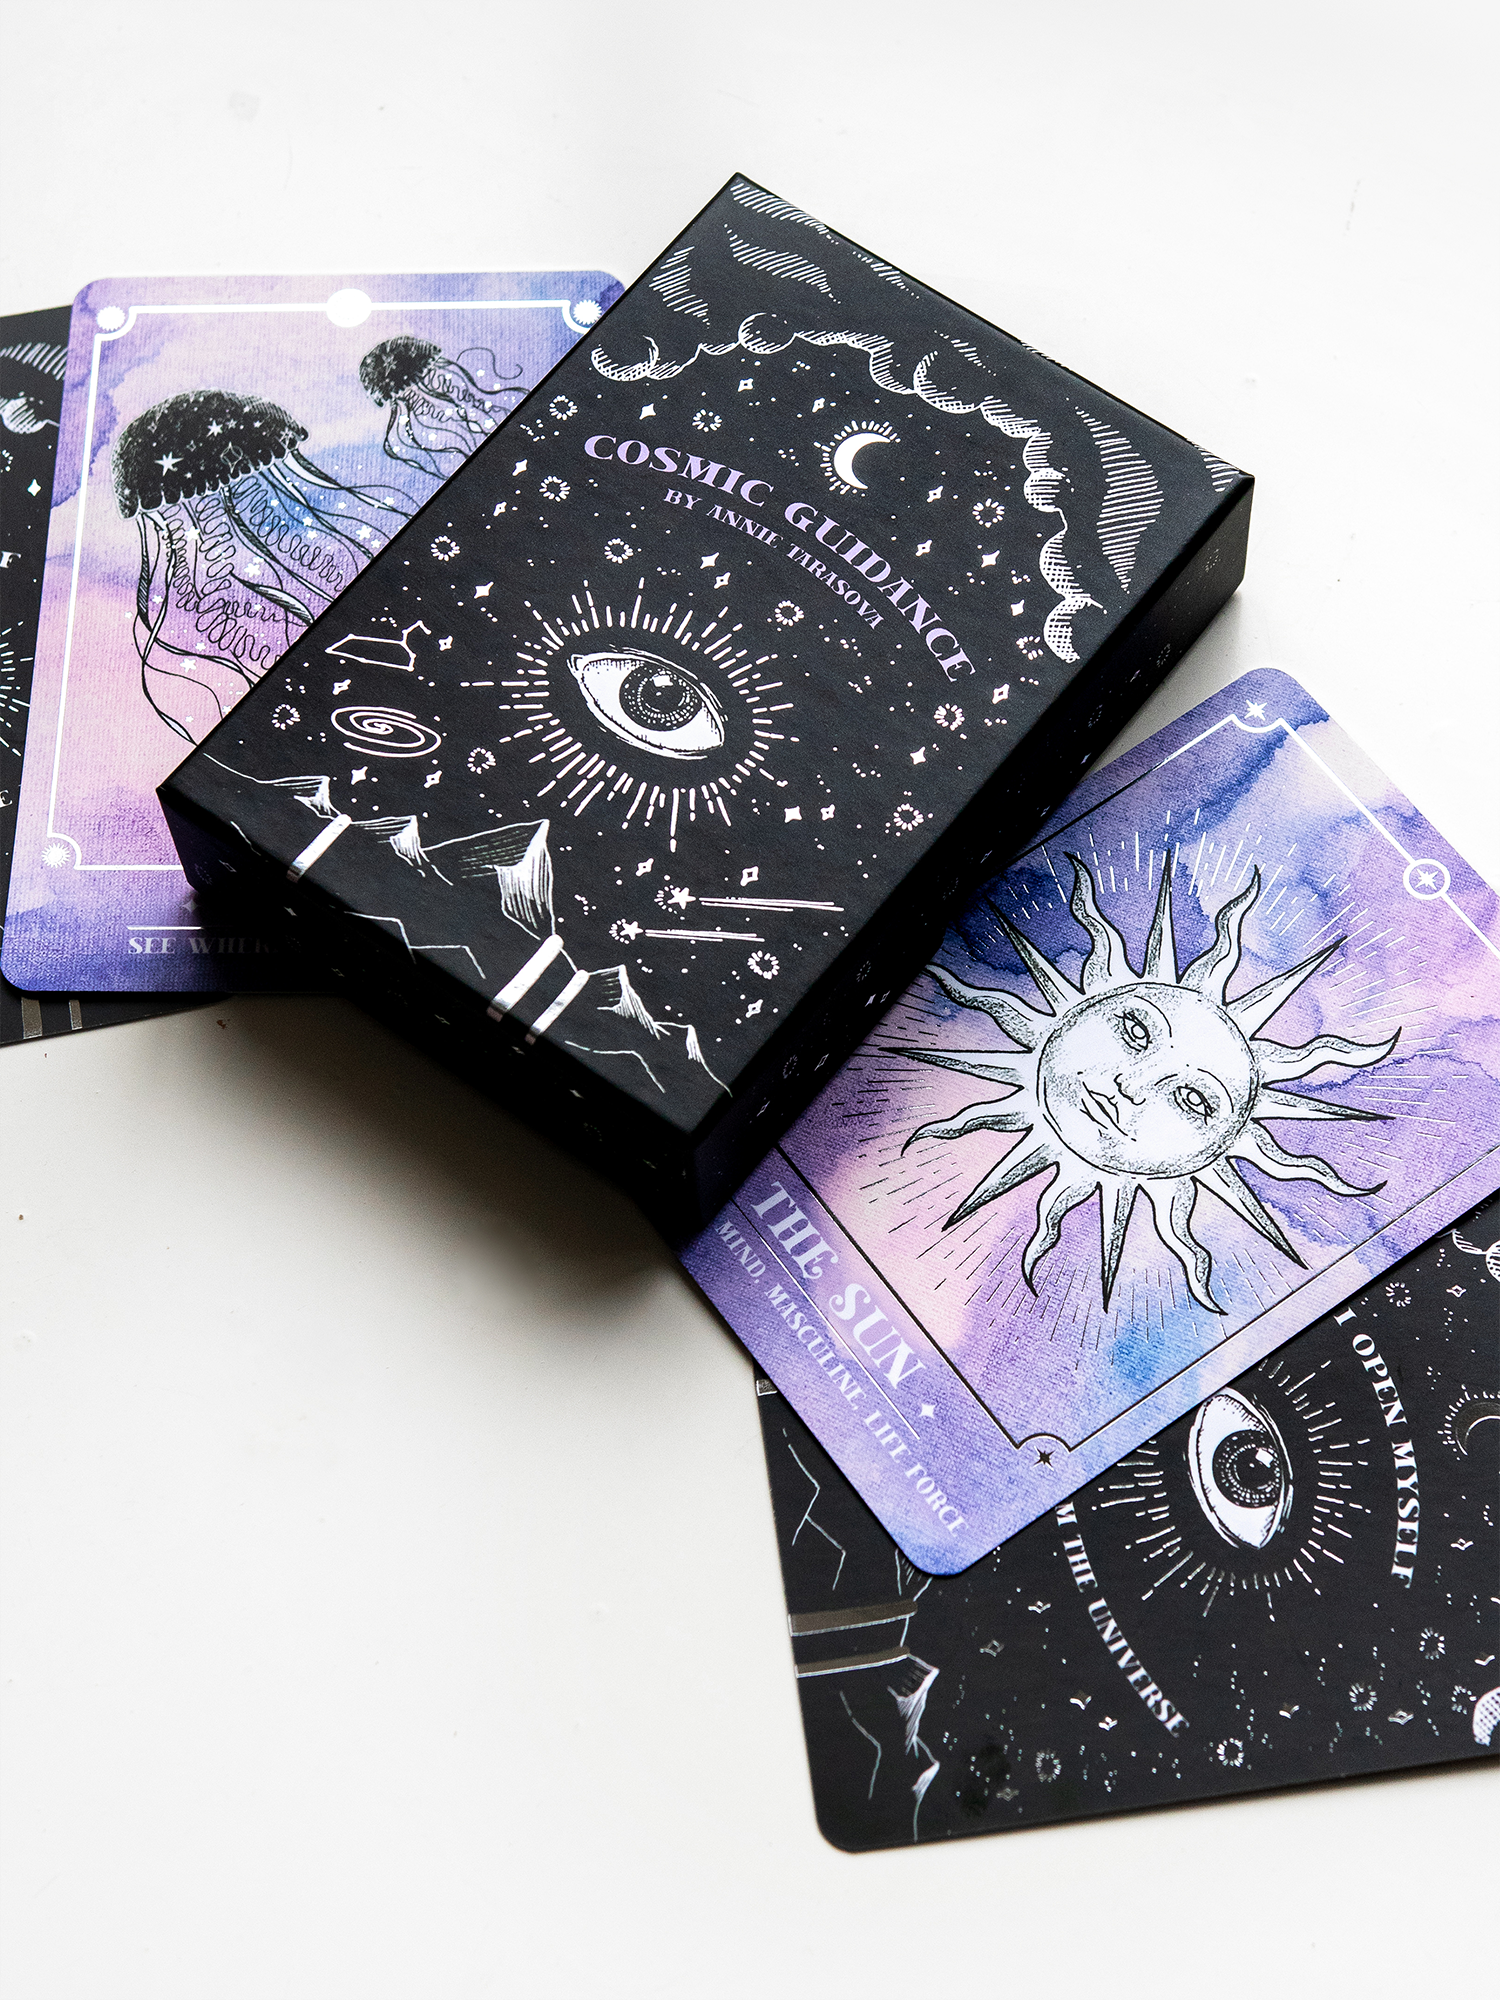 cosmic guidance oracle deck | dreamy moons